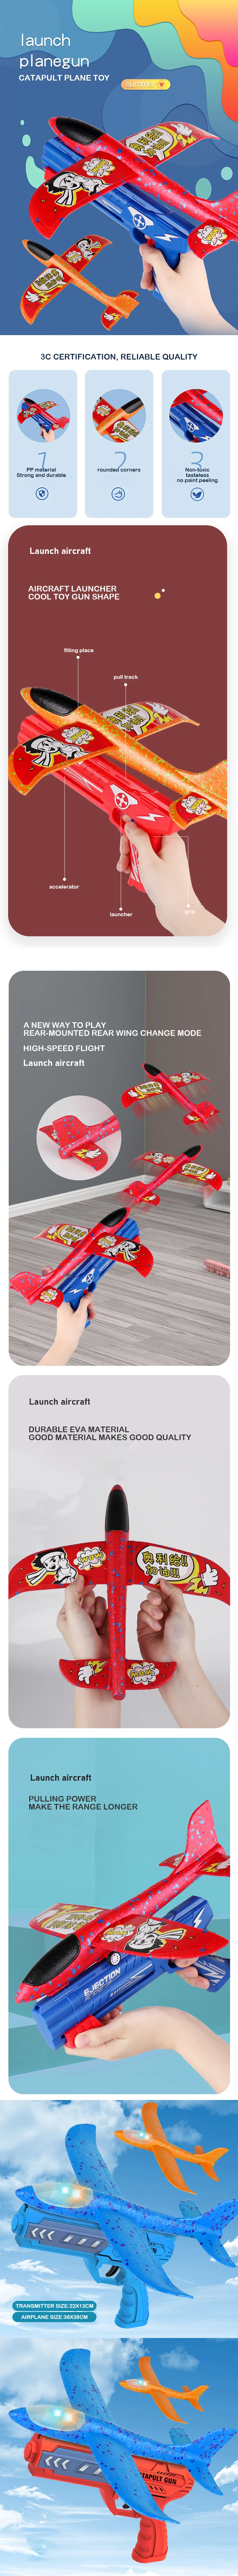 NEW catapult airplane gun toys 2 in 1 launch plane EVA foam toy guns for kids